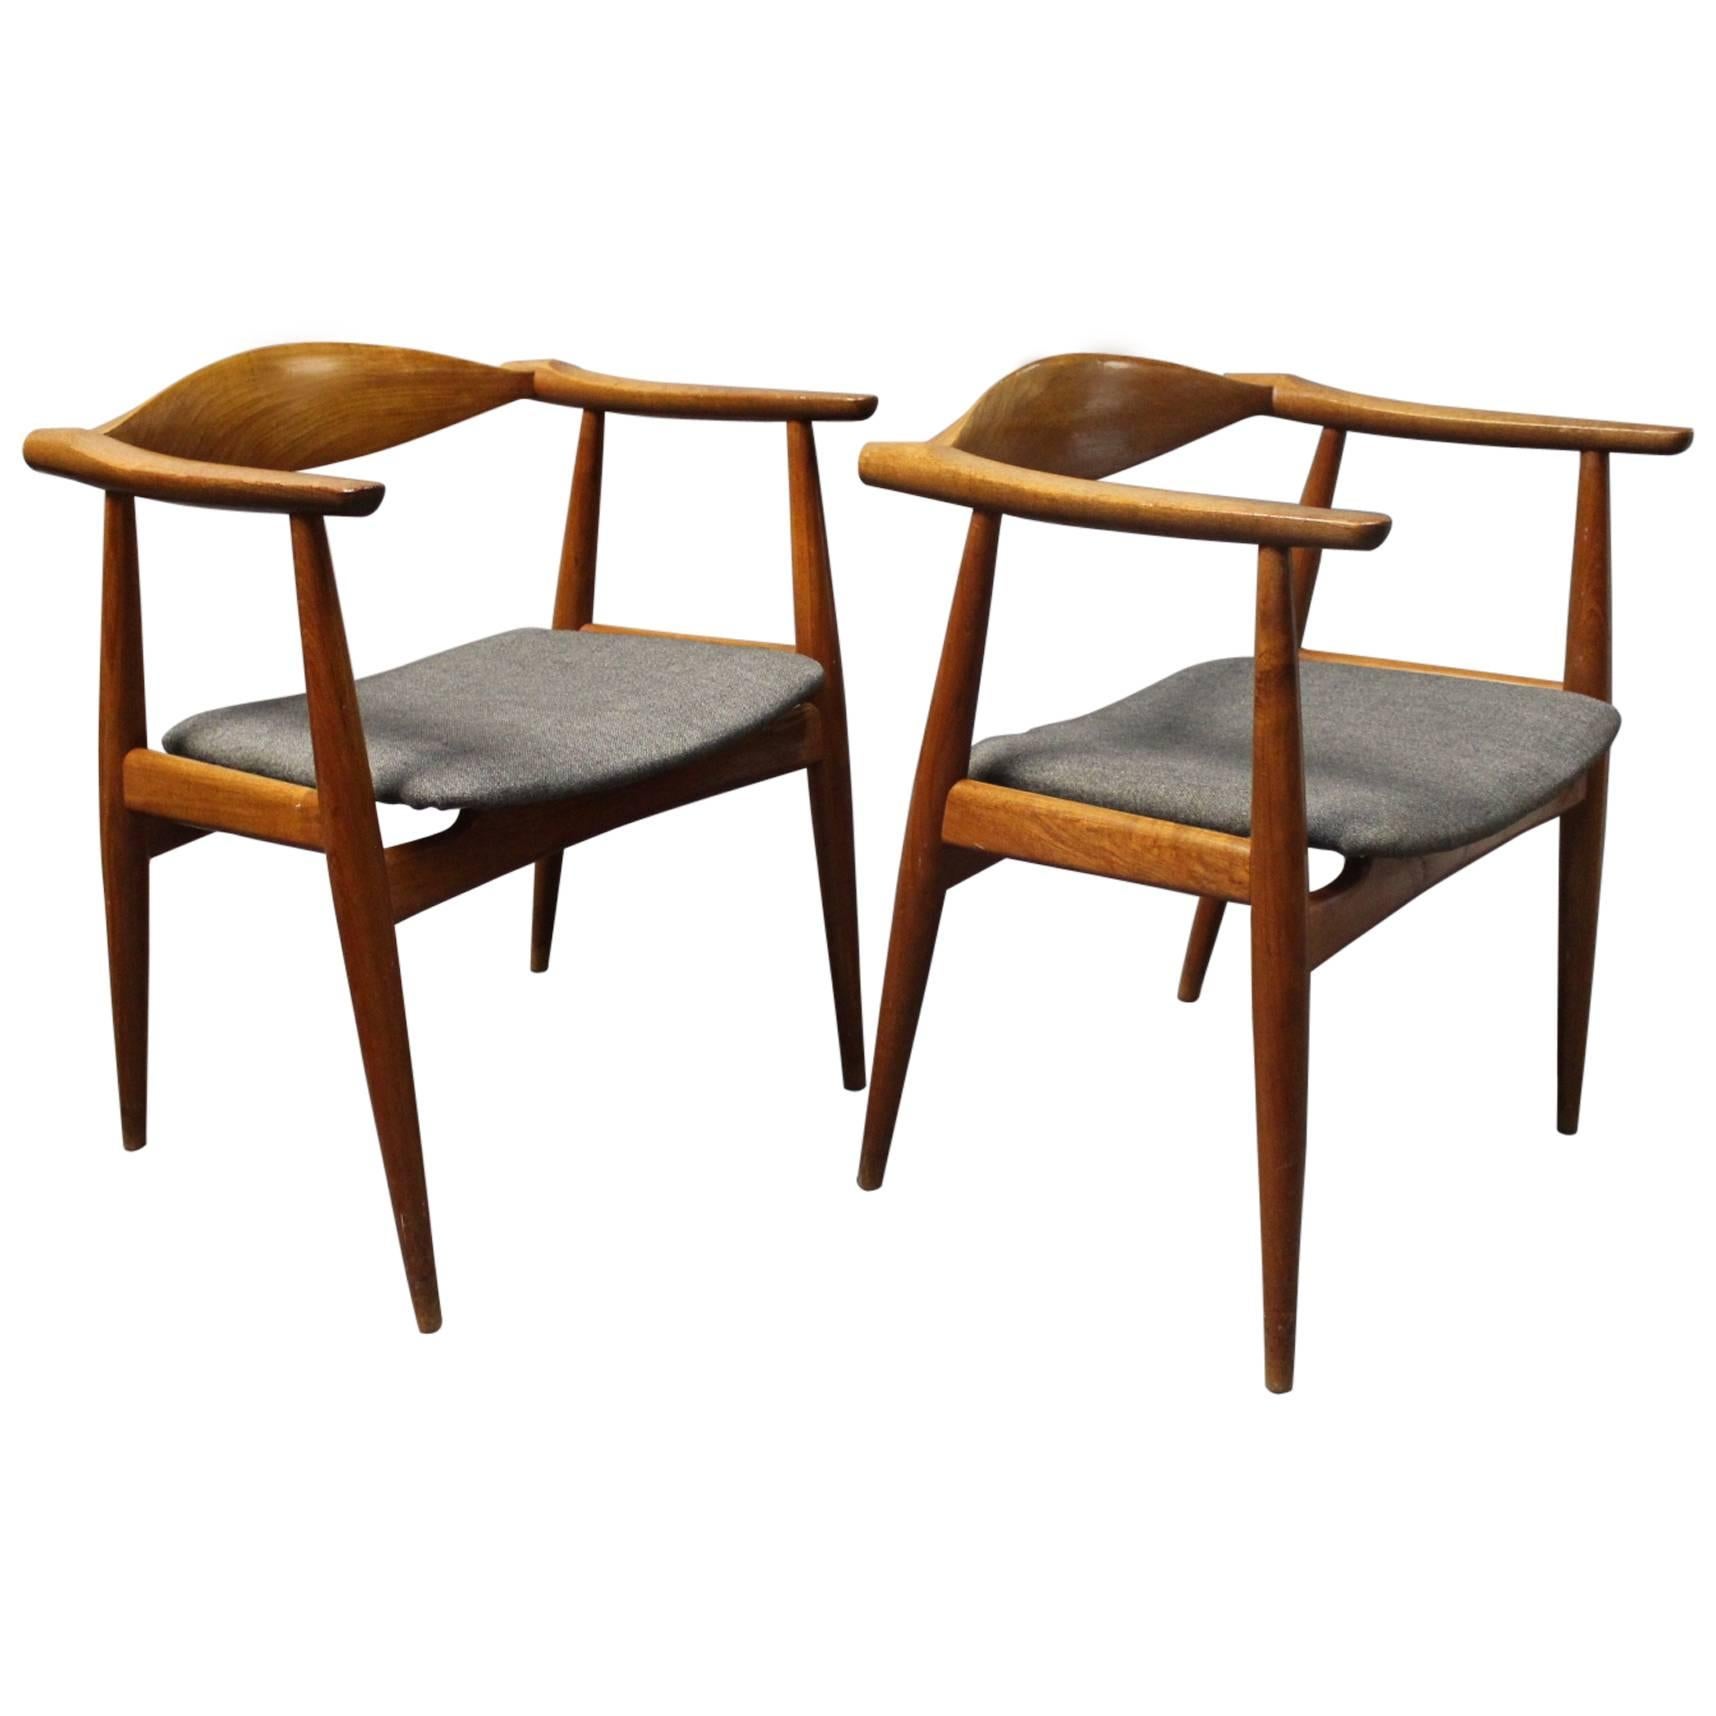 Pair of Ch-35 Chairs by Hans J. Wegner and Carl Hansen & Søn, 1960s